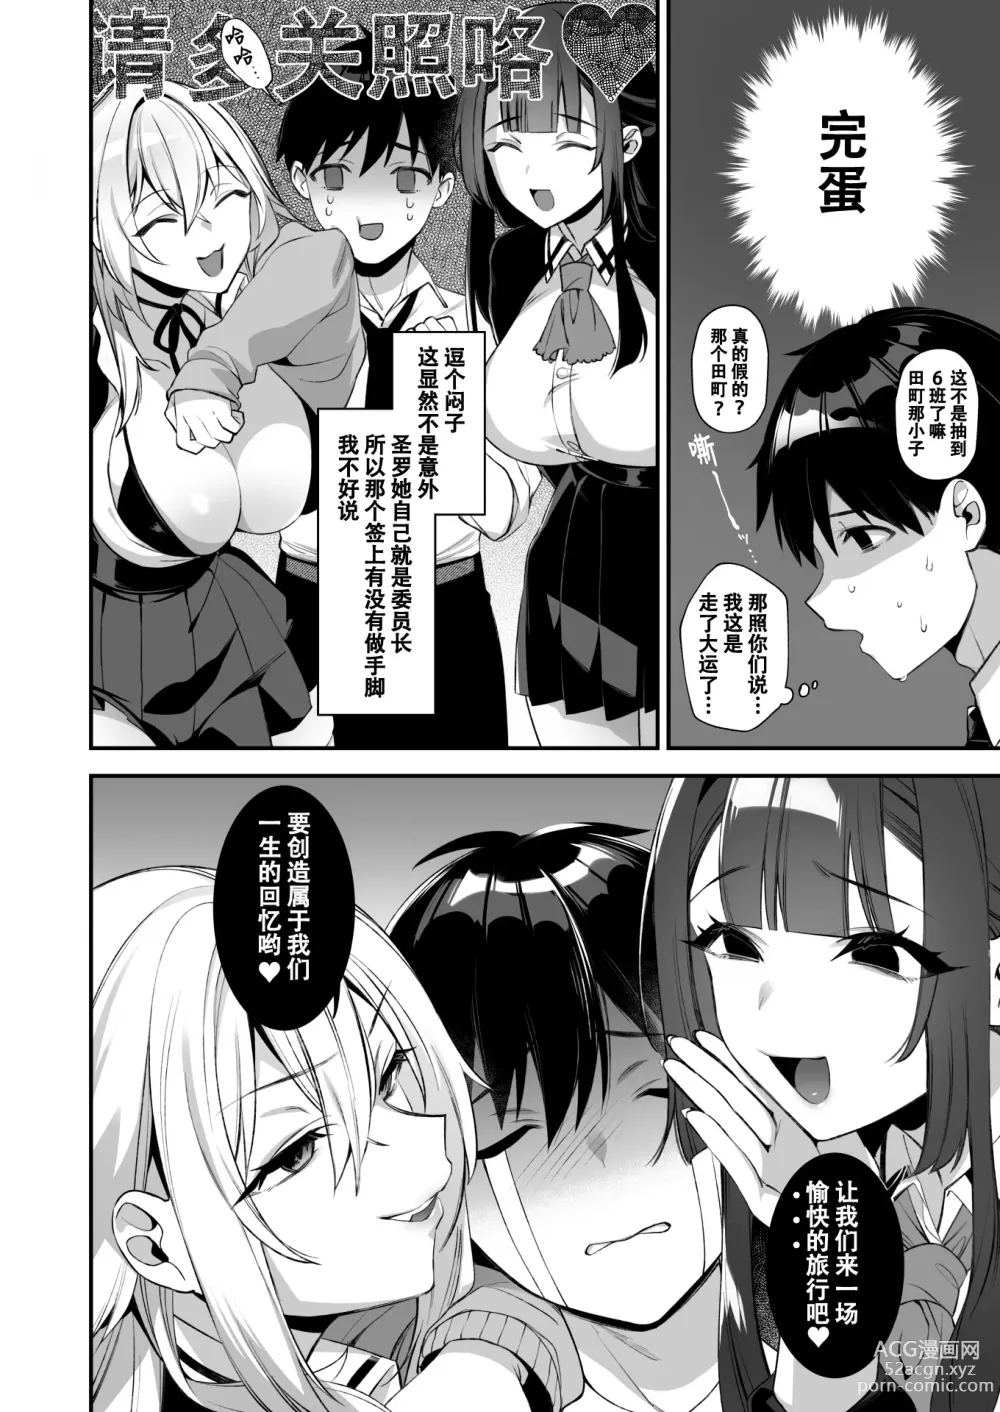 Page 5 of manga Hypnosis 3 (uncensored)